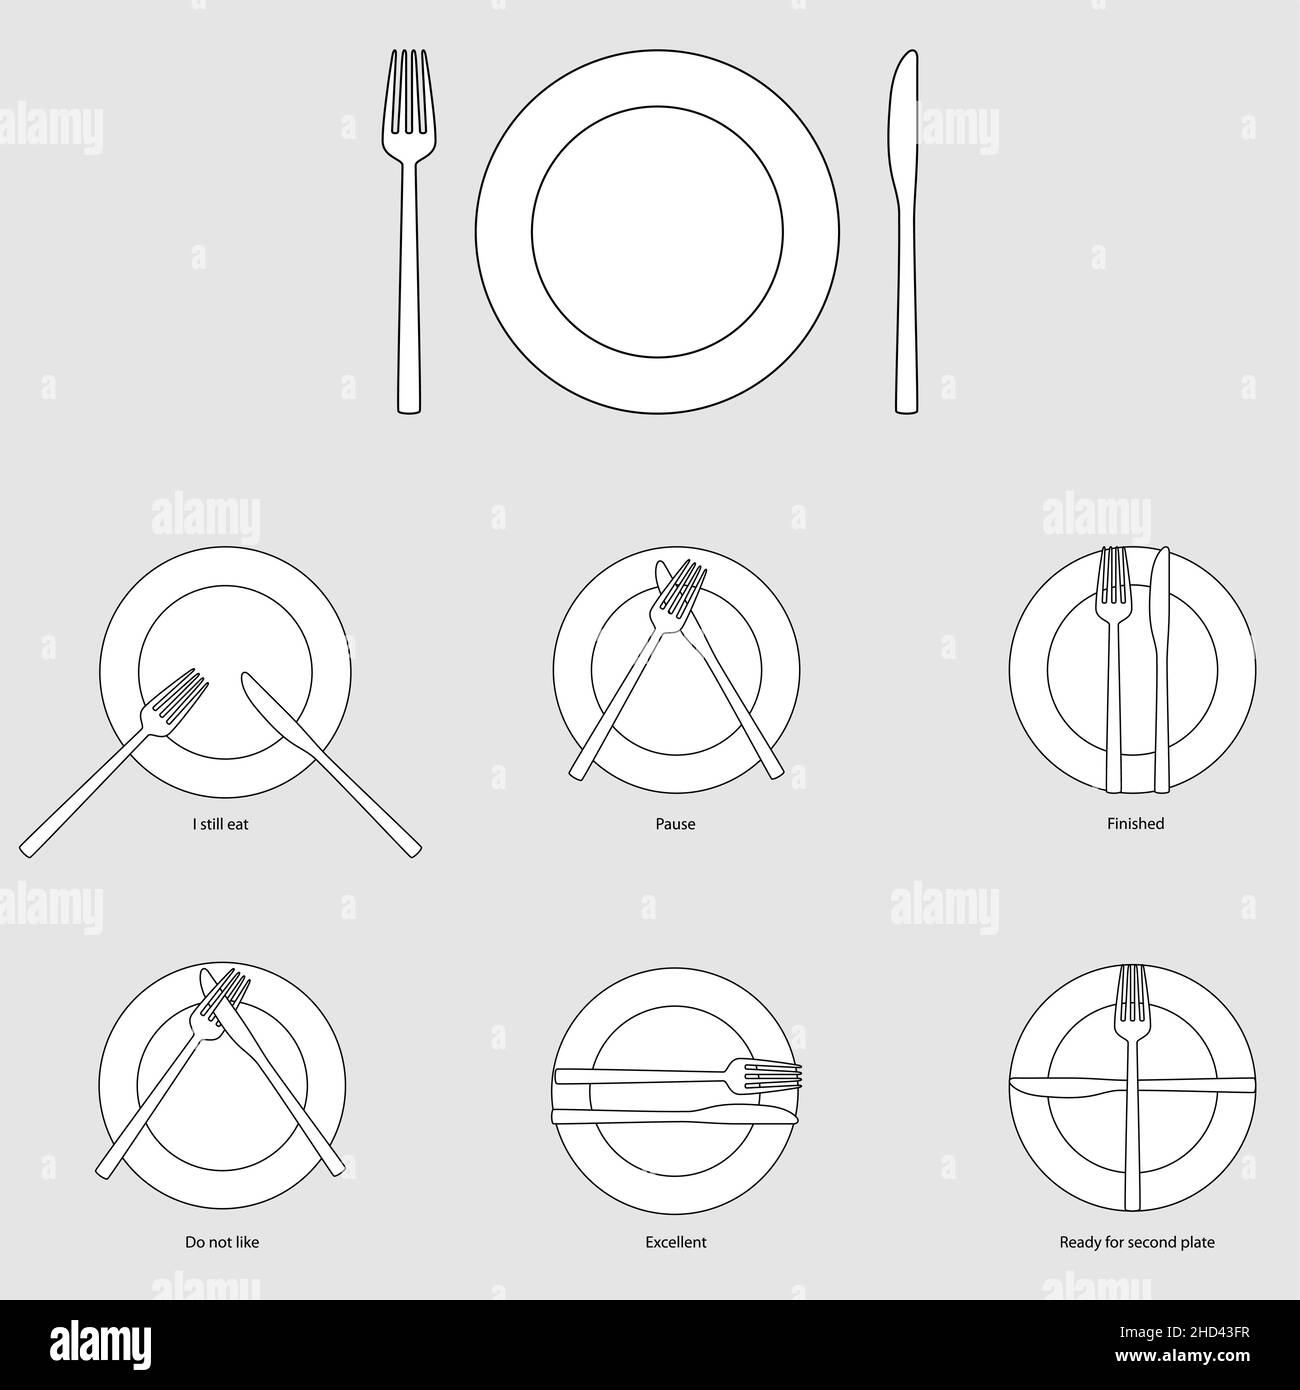 Table etiquette, vector illustration Stock Vector